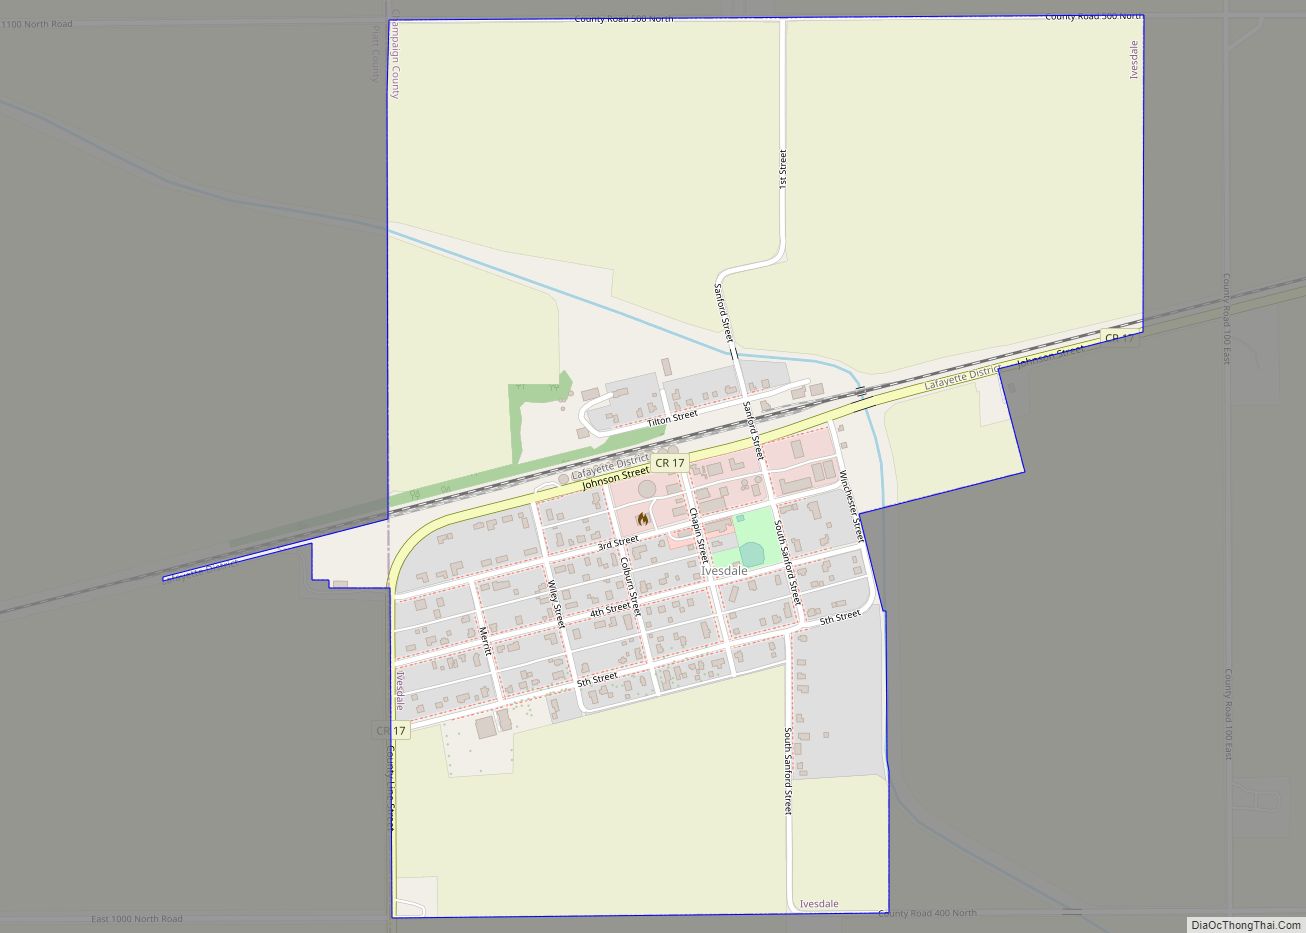 Map of Ivesdale village